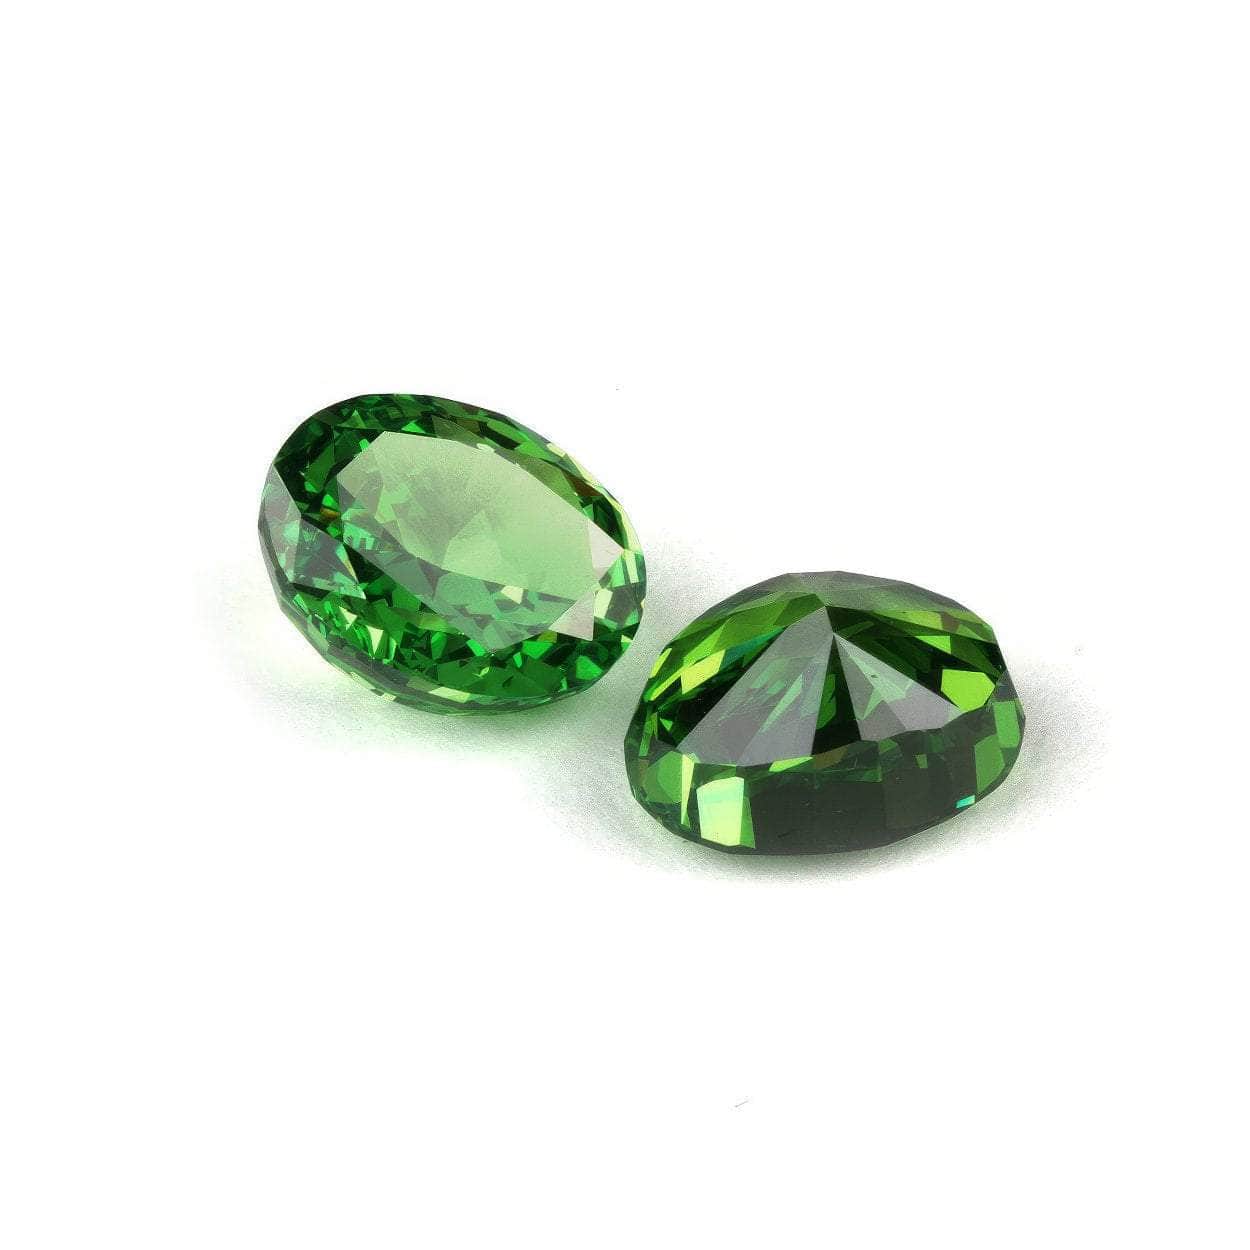 3 Set Emerald Oval Cut Lab Grown Diamond Gemstone